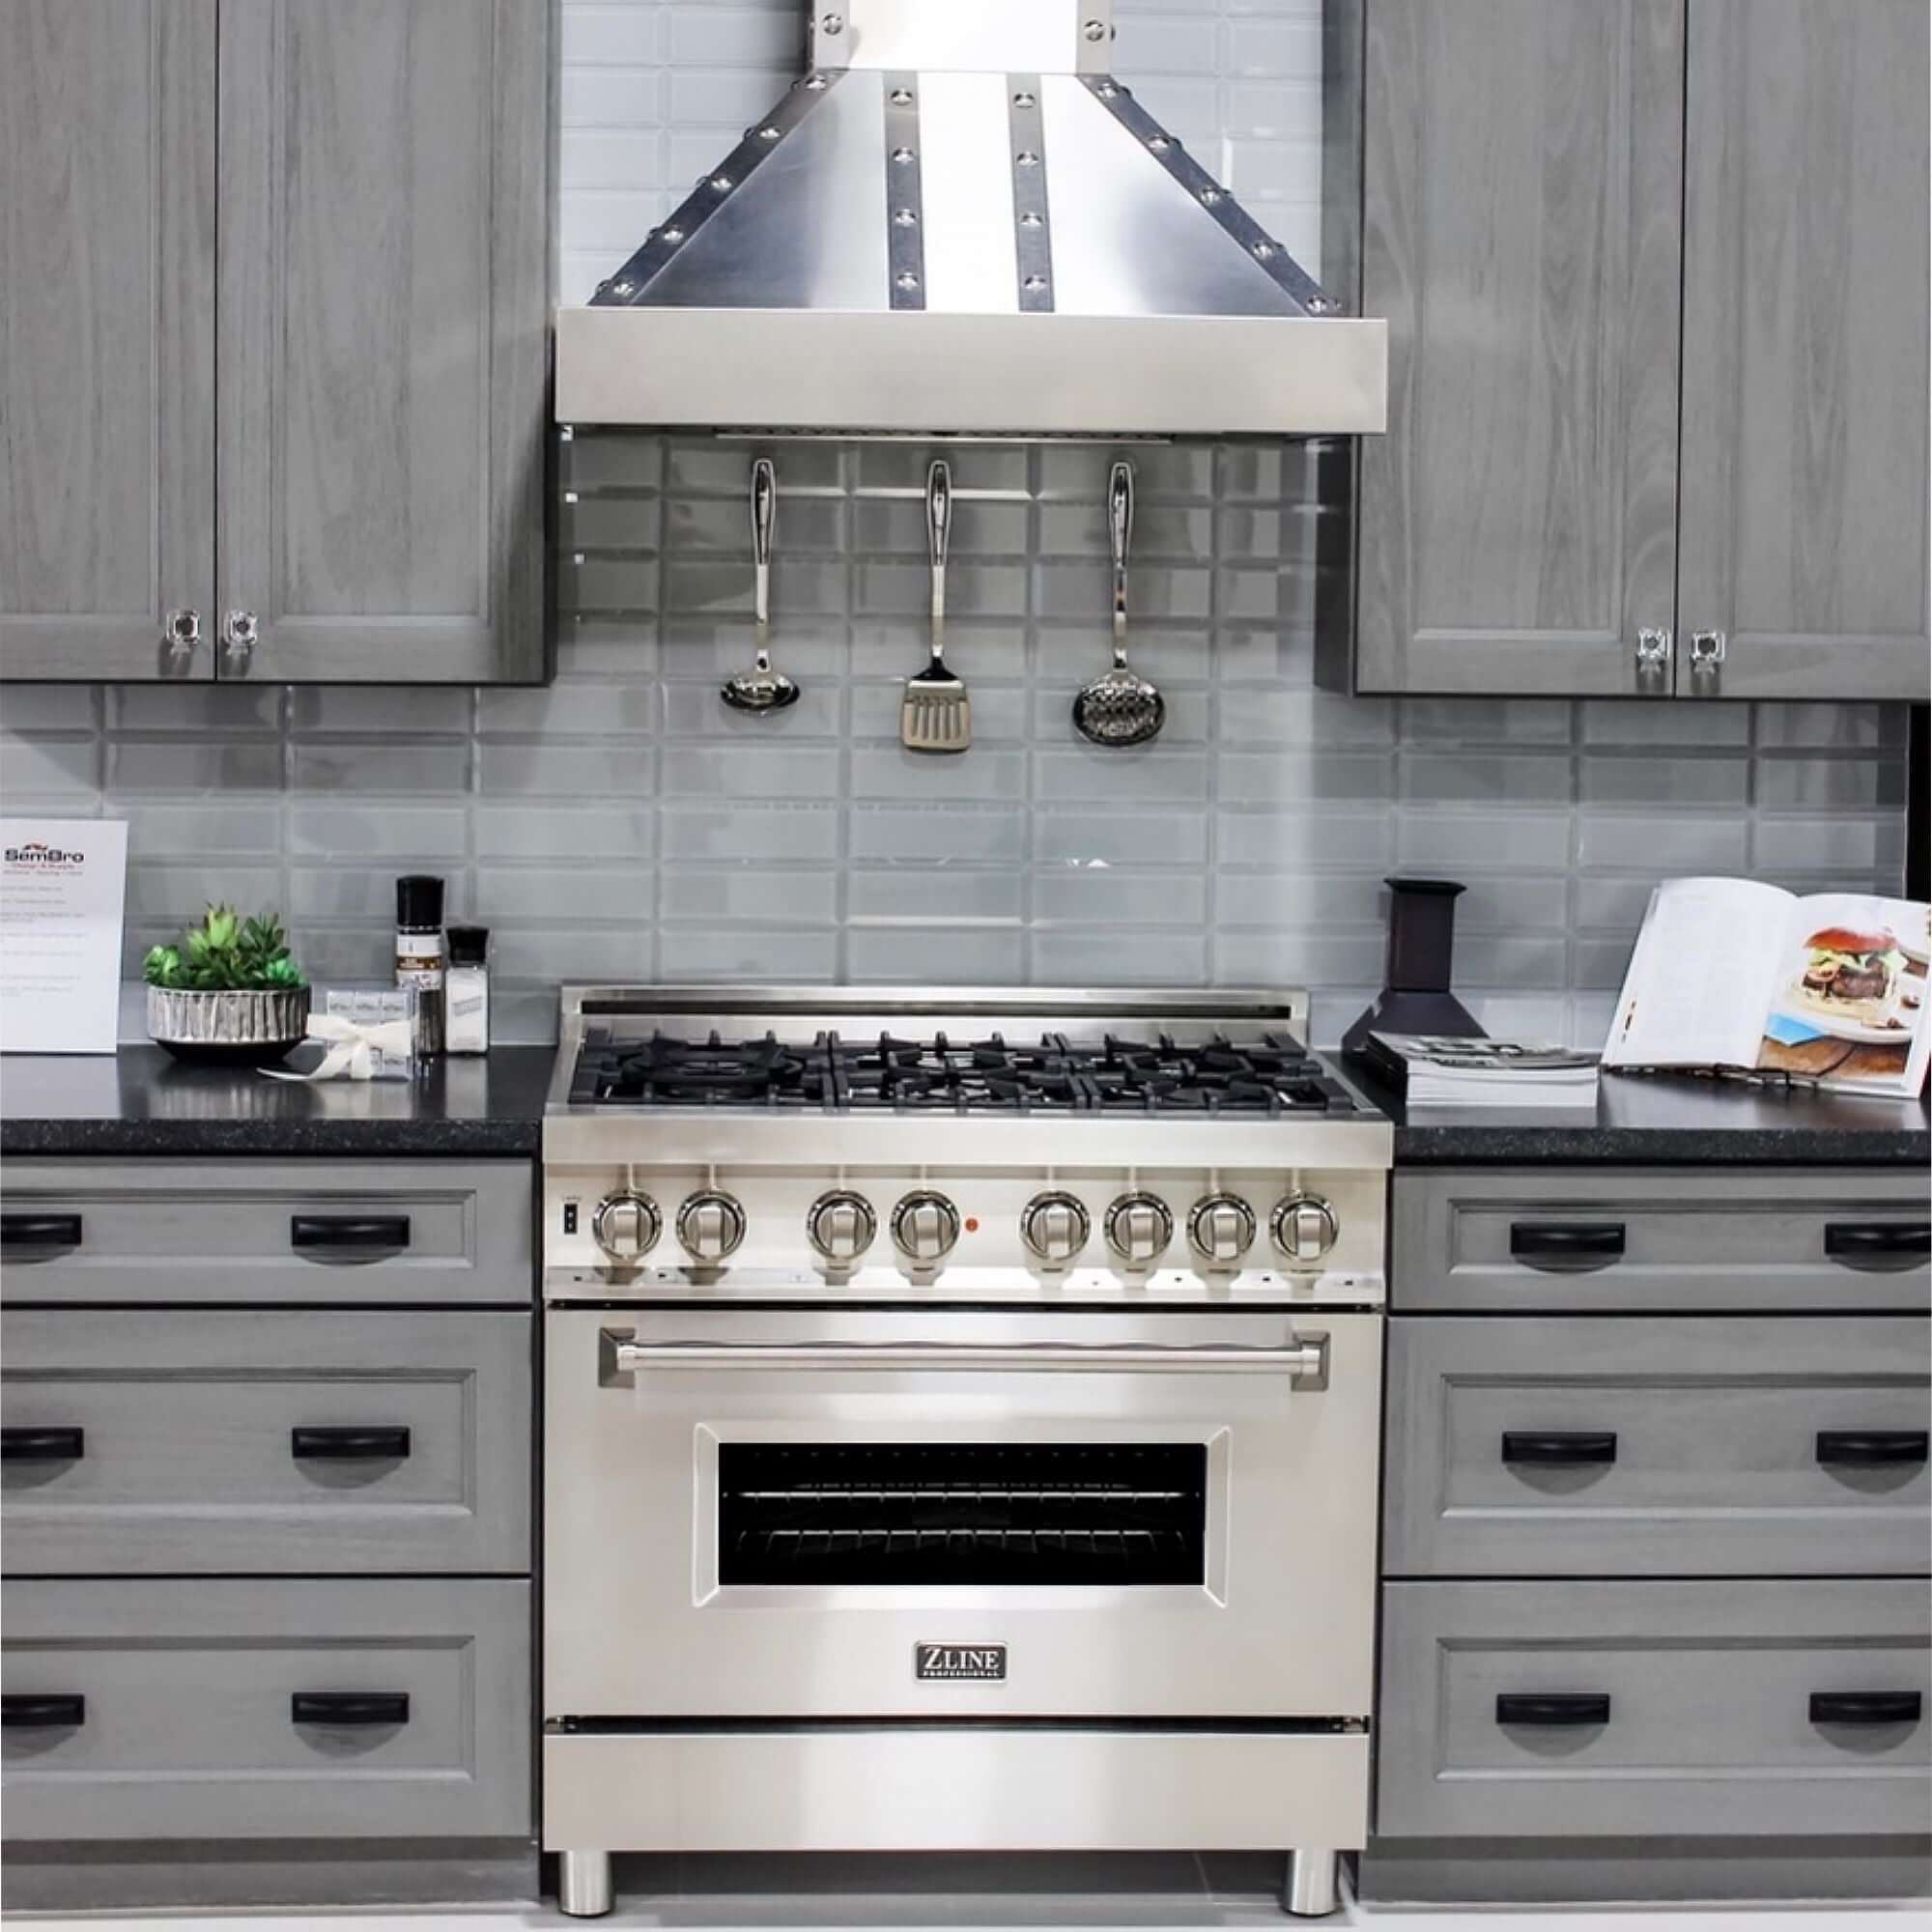 ZLINE Designer Series Wall Mount Range Hood in DuraSnow Stainless Steel with Nailhead Rivets (655-4SSSS) in a modern luxury kitchen.